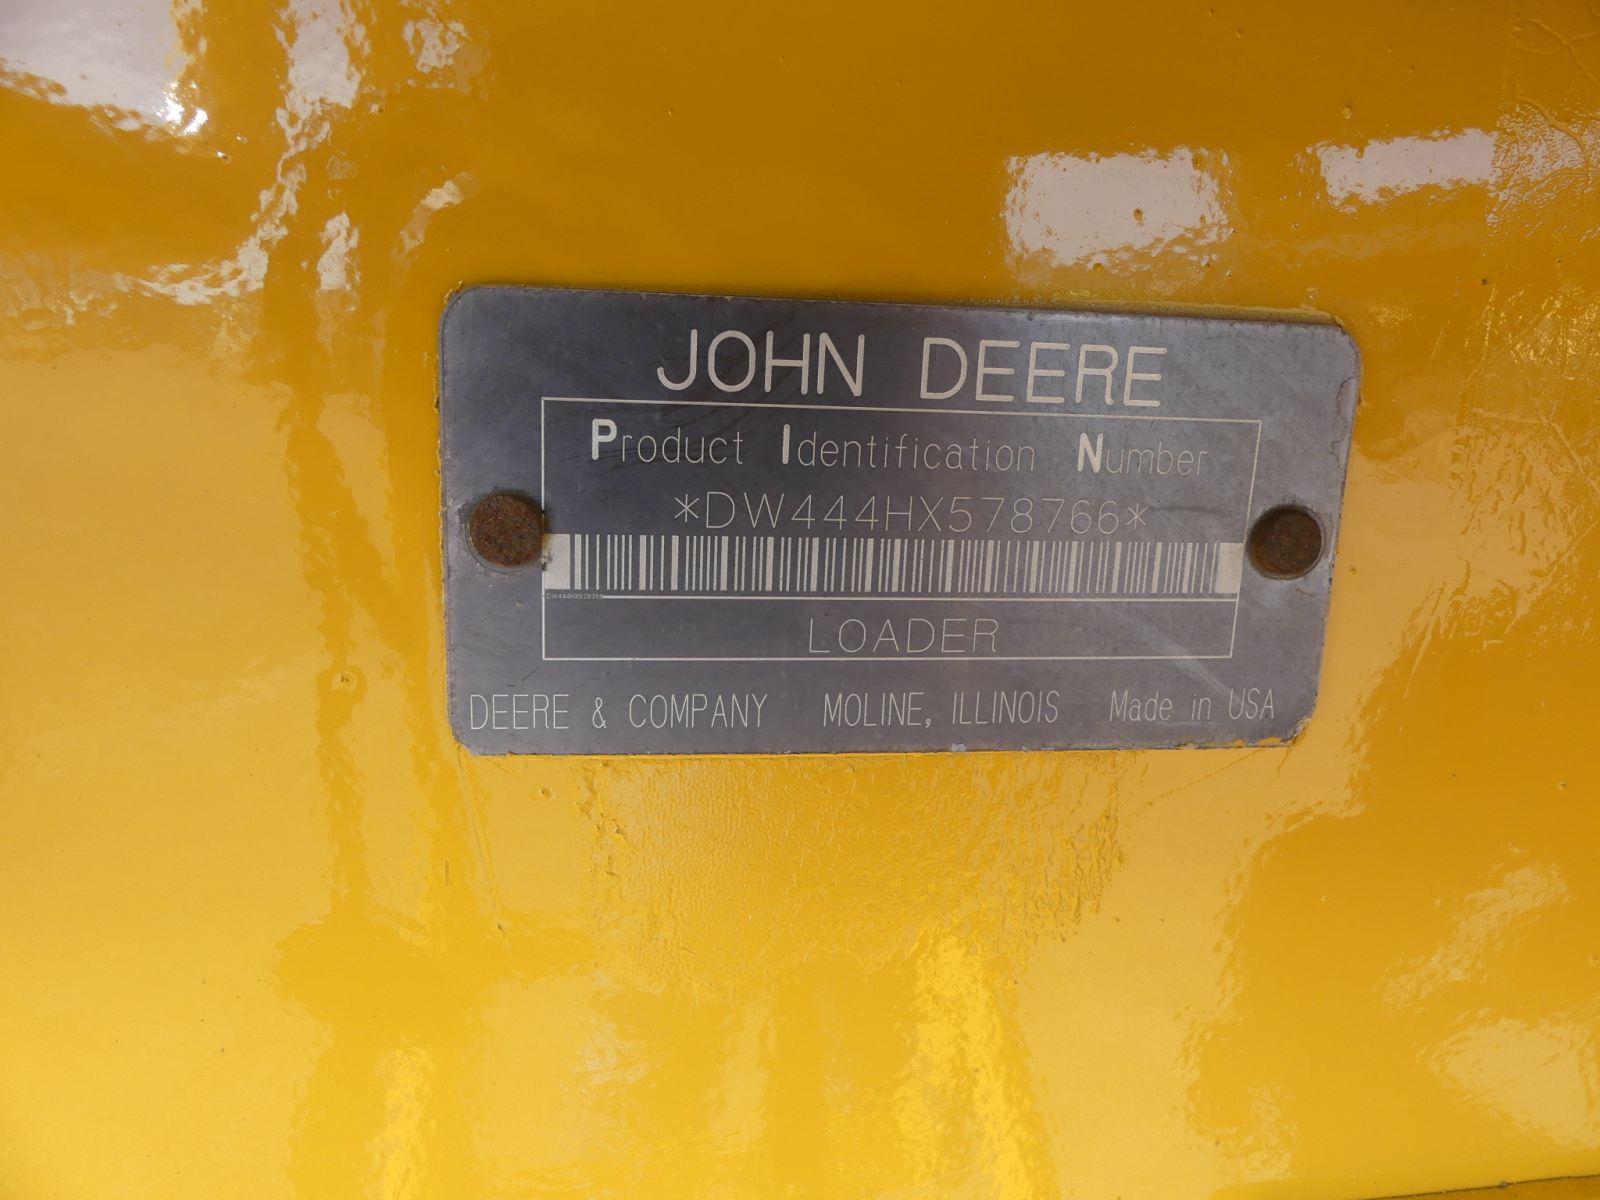 2001 John Deere 444H Rubber-tired Loader, s/n DW444HX578766: C/A, Heat, 4-i